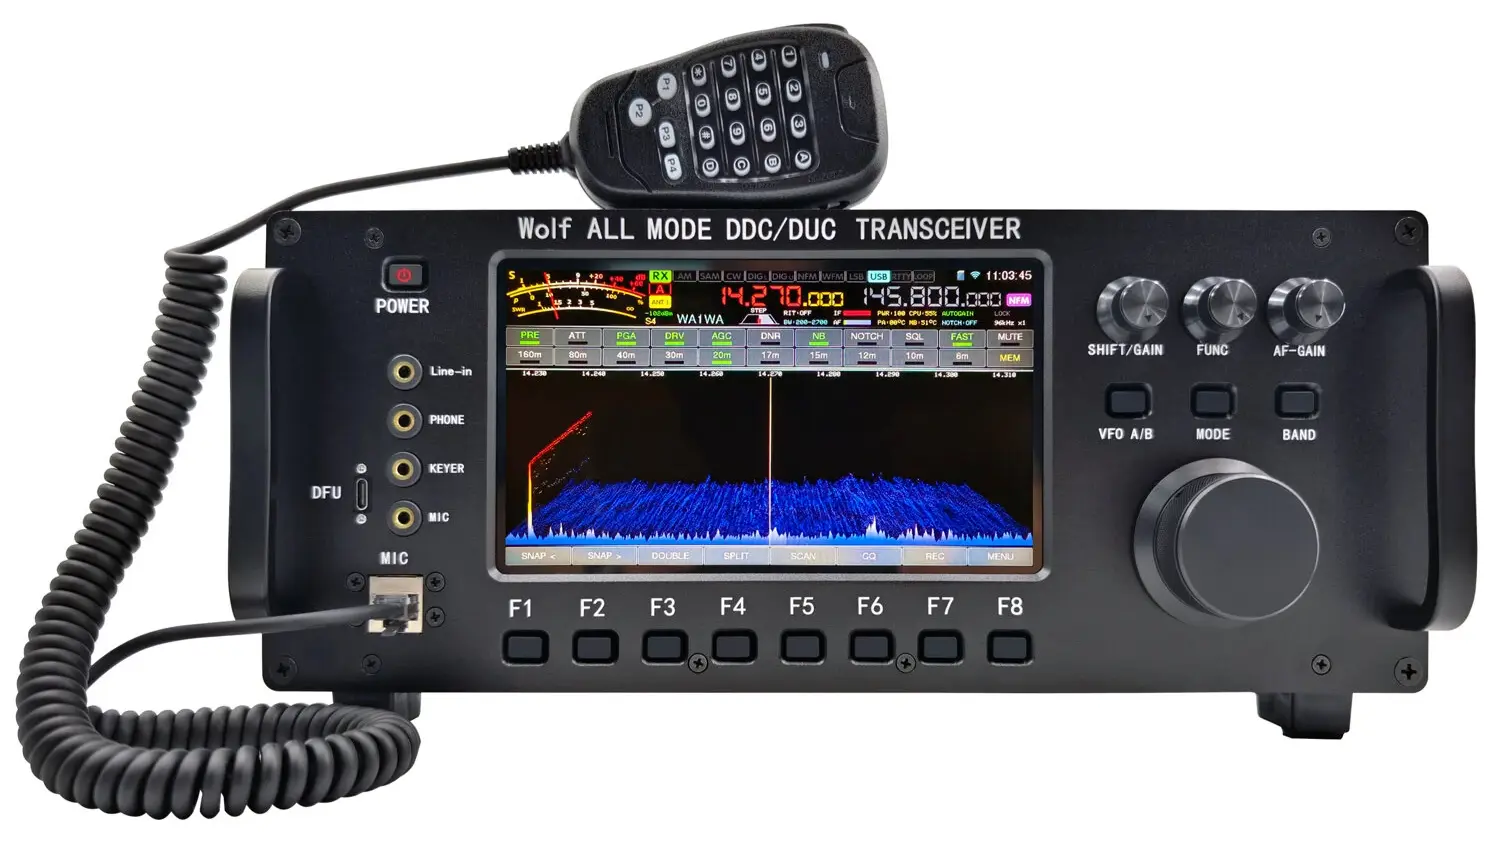 NEW – Wolf All Mode 20W 0-750MHz Mode DDC/DUC Transceiver LF/HF/6M/VHF/UHF Transceiver mit WIFI von UA3REO